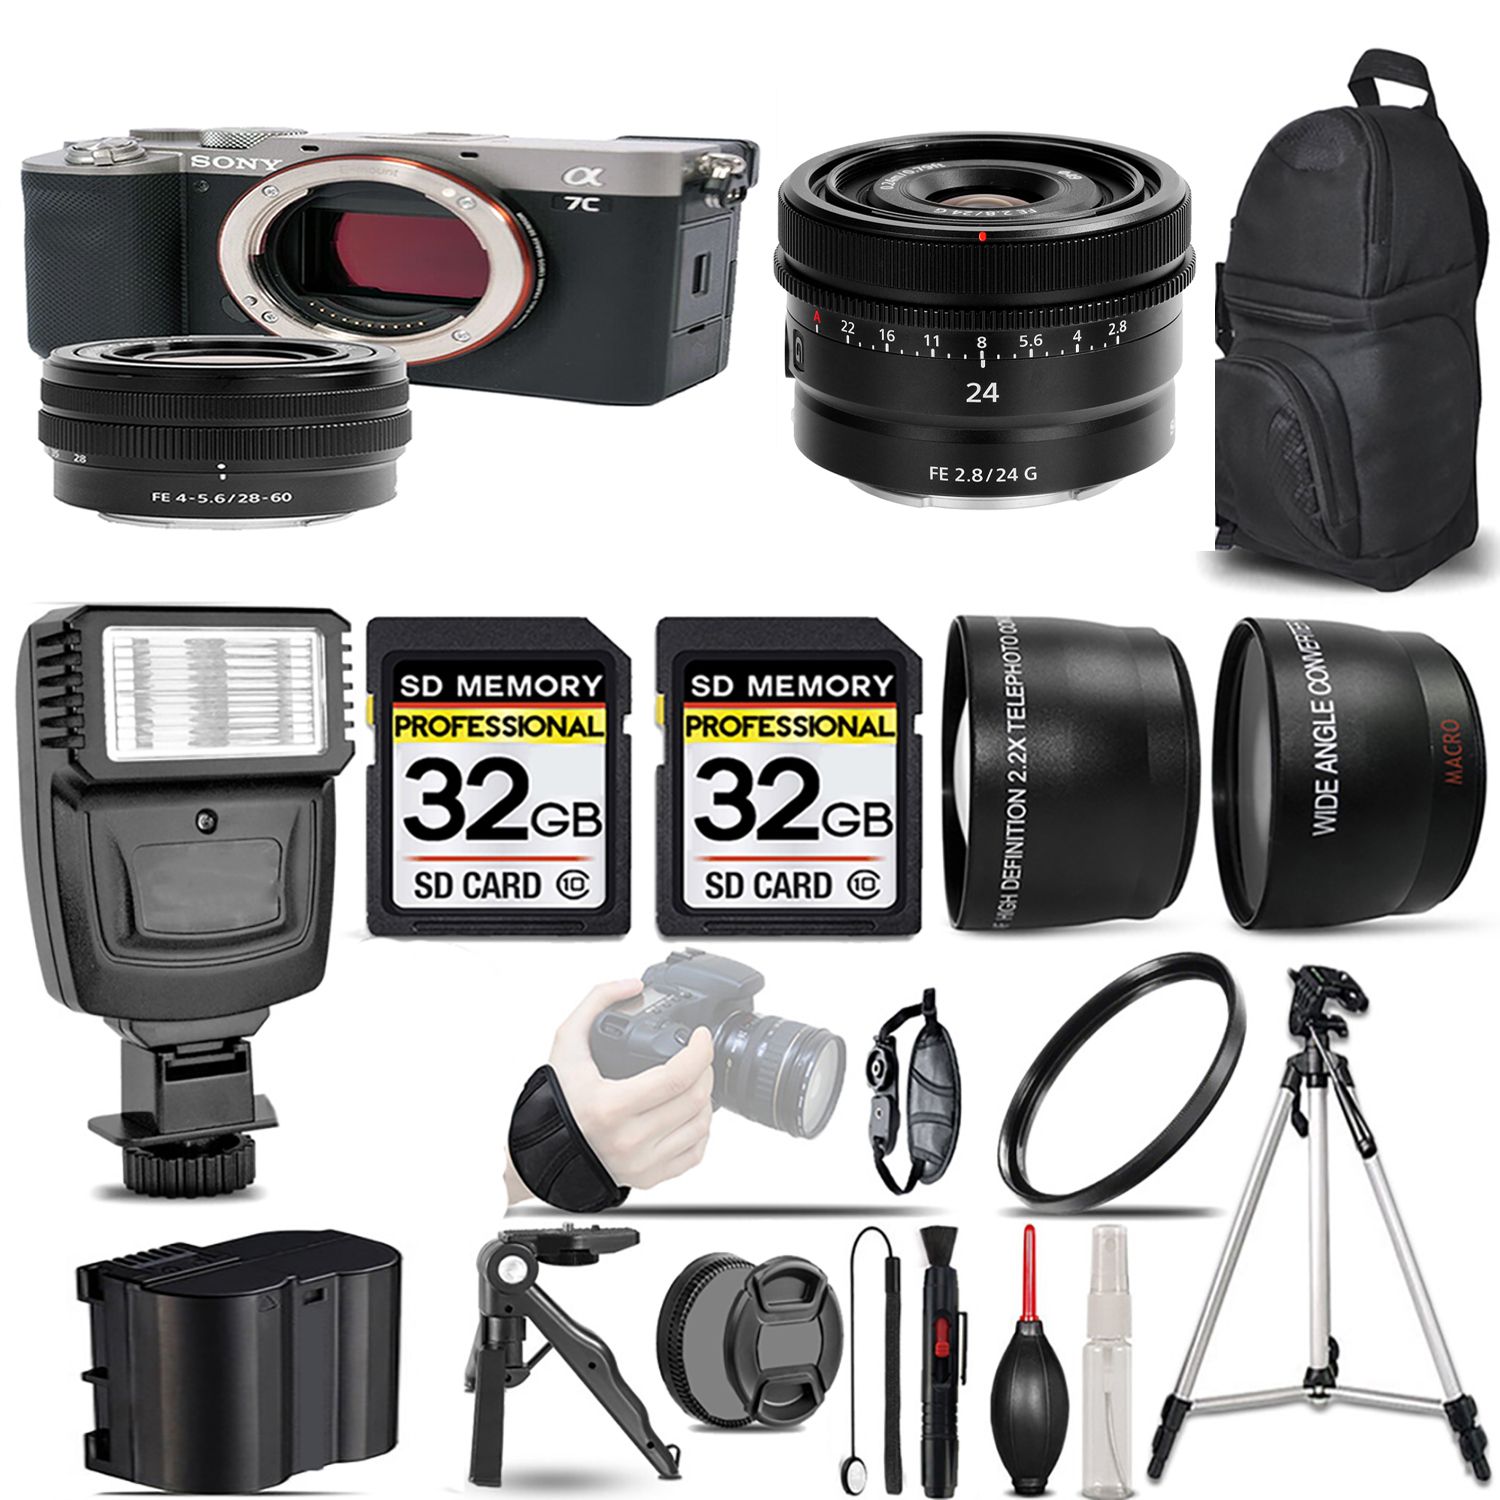 Alpha a7C Camera (Silver) + 28-60mm Lens + 24mm f/2.8 G Lens + Flash + 64GB *FREE SHIPPING*